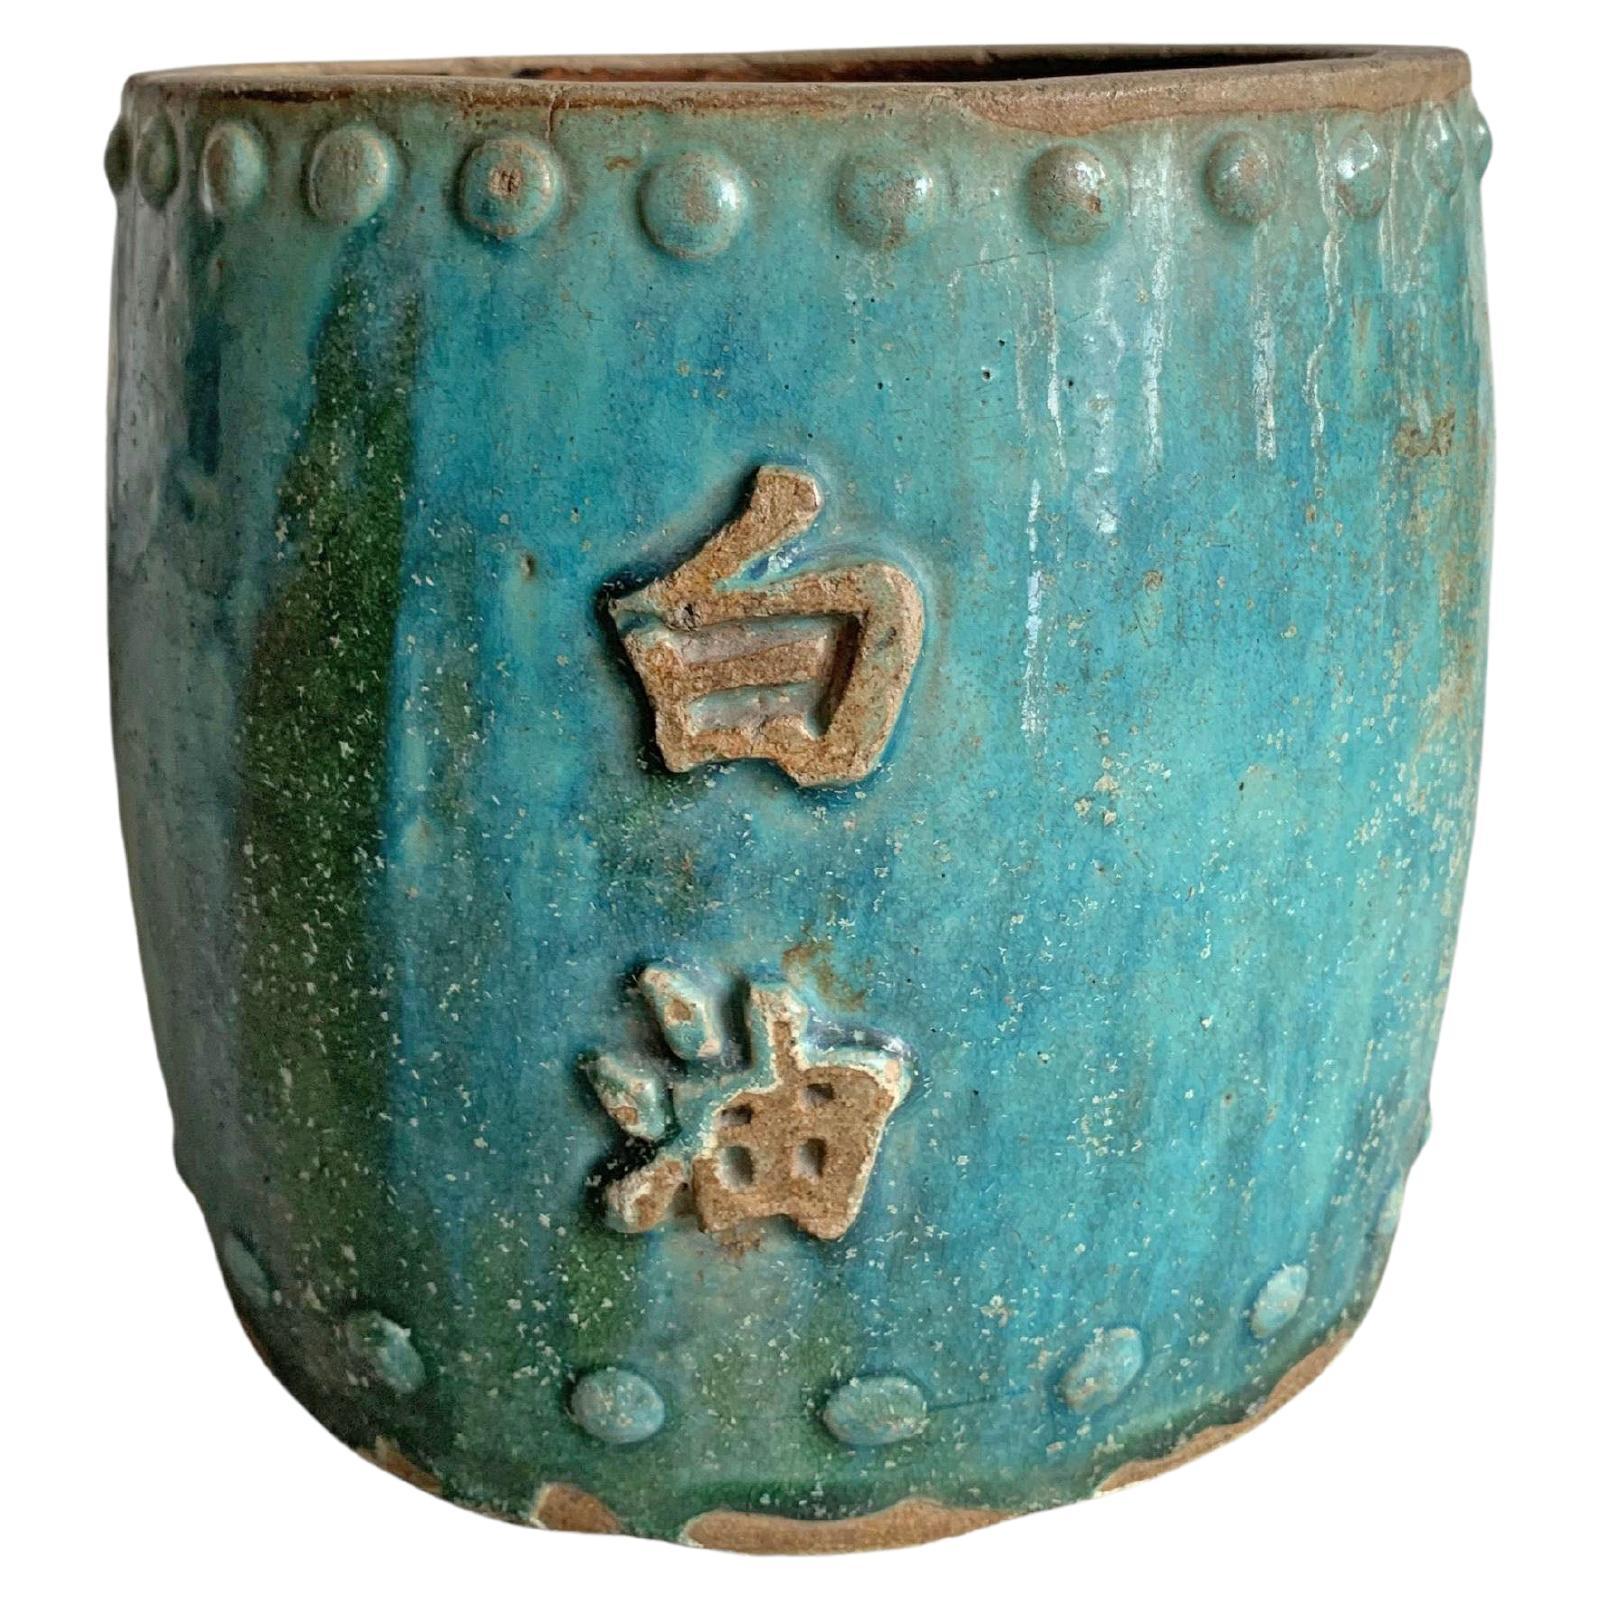 Chinese Green Glazed Ceramic "White Oil" Storage Jar / Planter, c. 1900